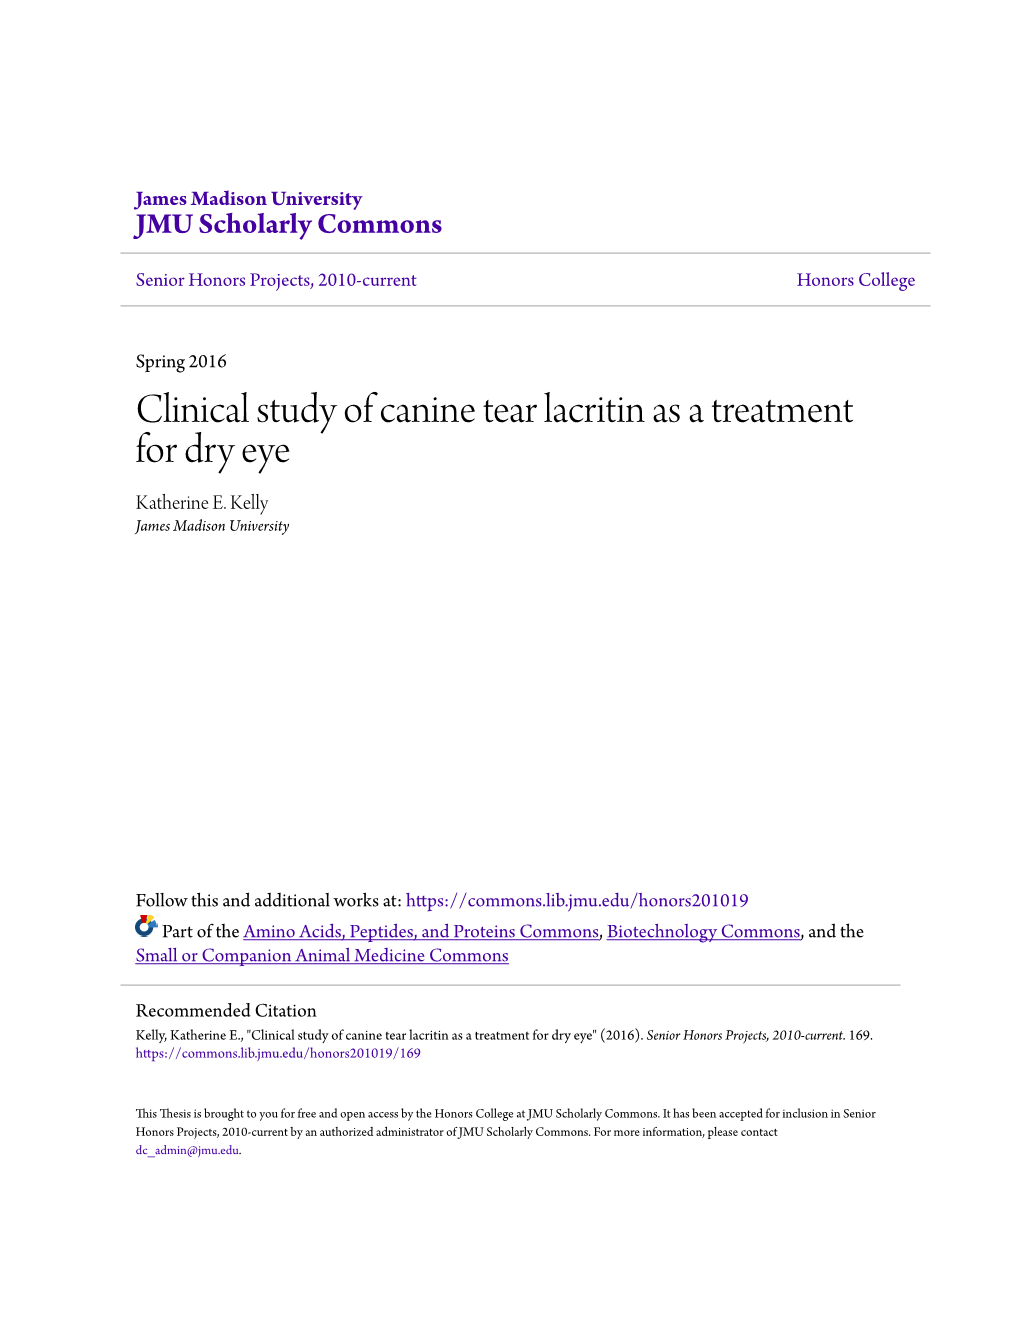 Clinical Study of Canine Tear Lacritin As a Treatment for Dry Eye Katherine E